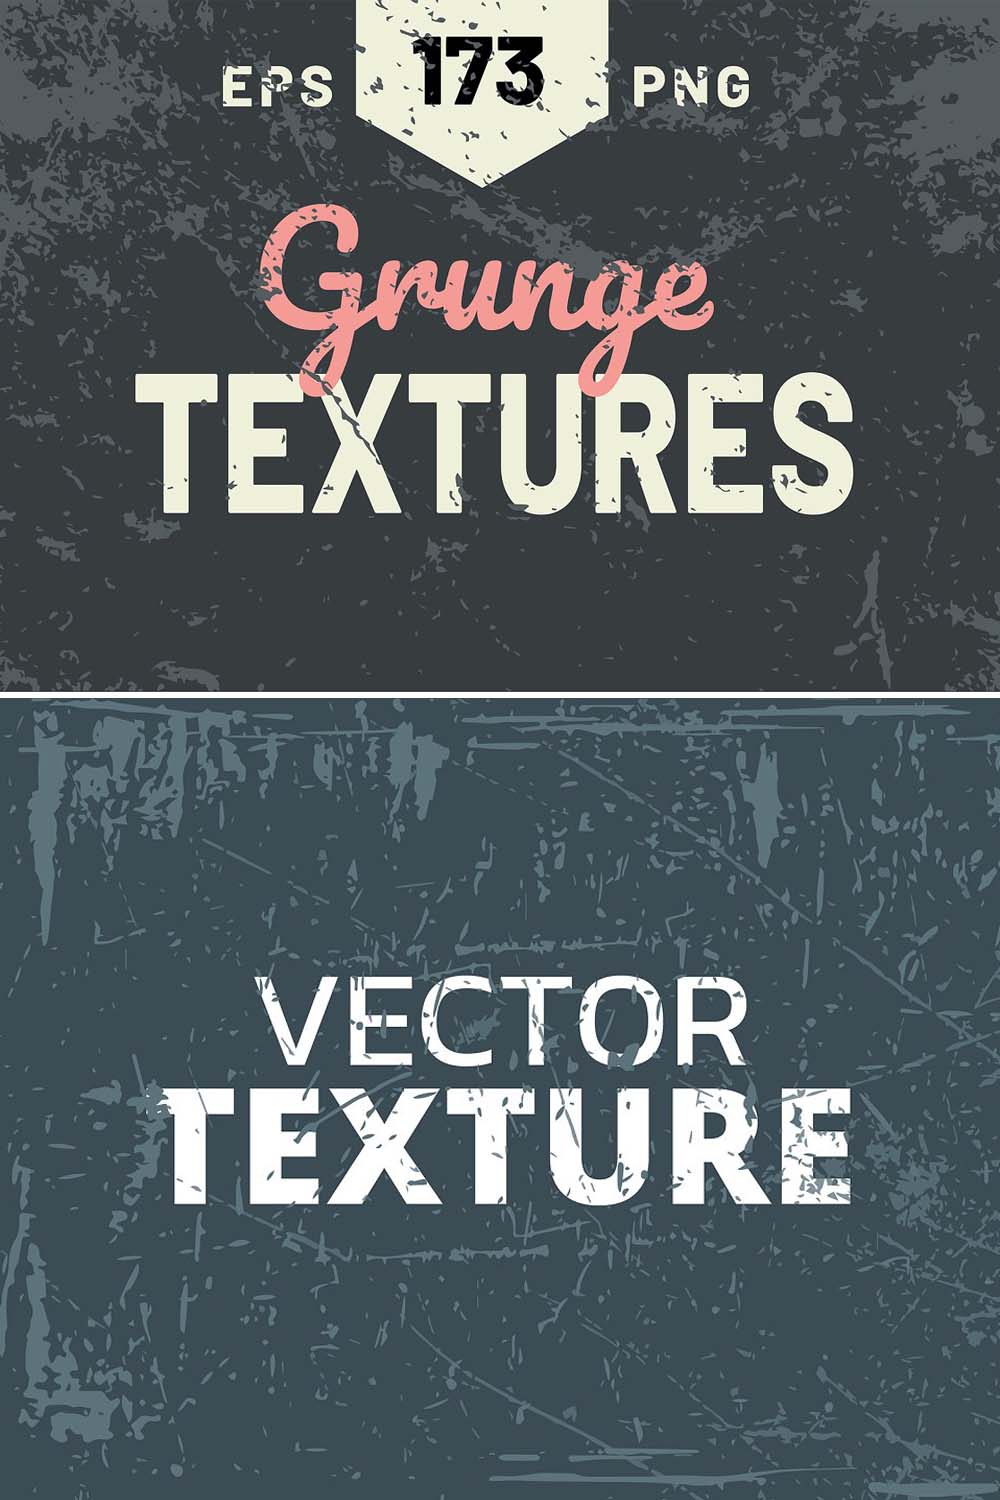 Vector Gunge Texture pinterest preview image.